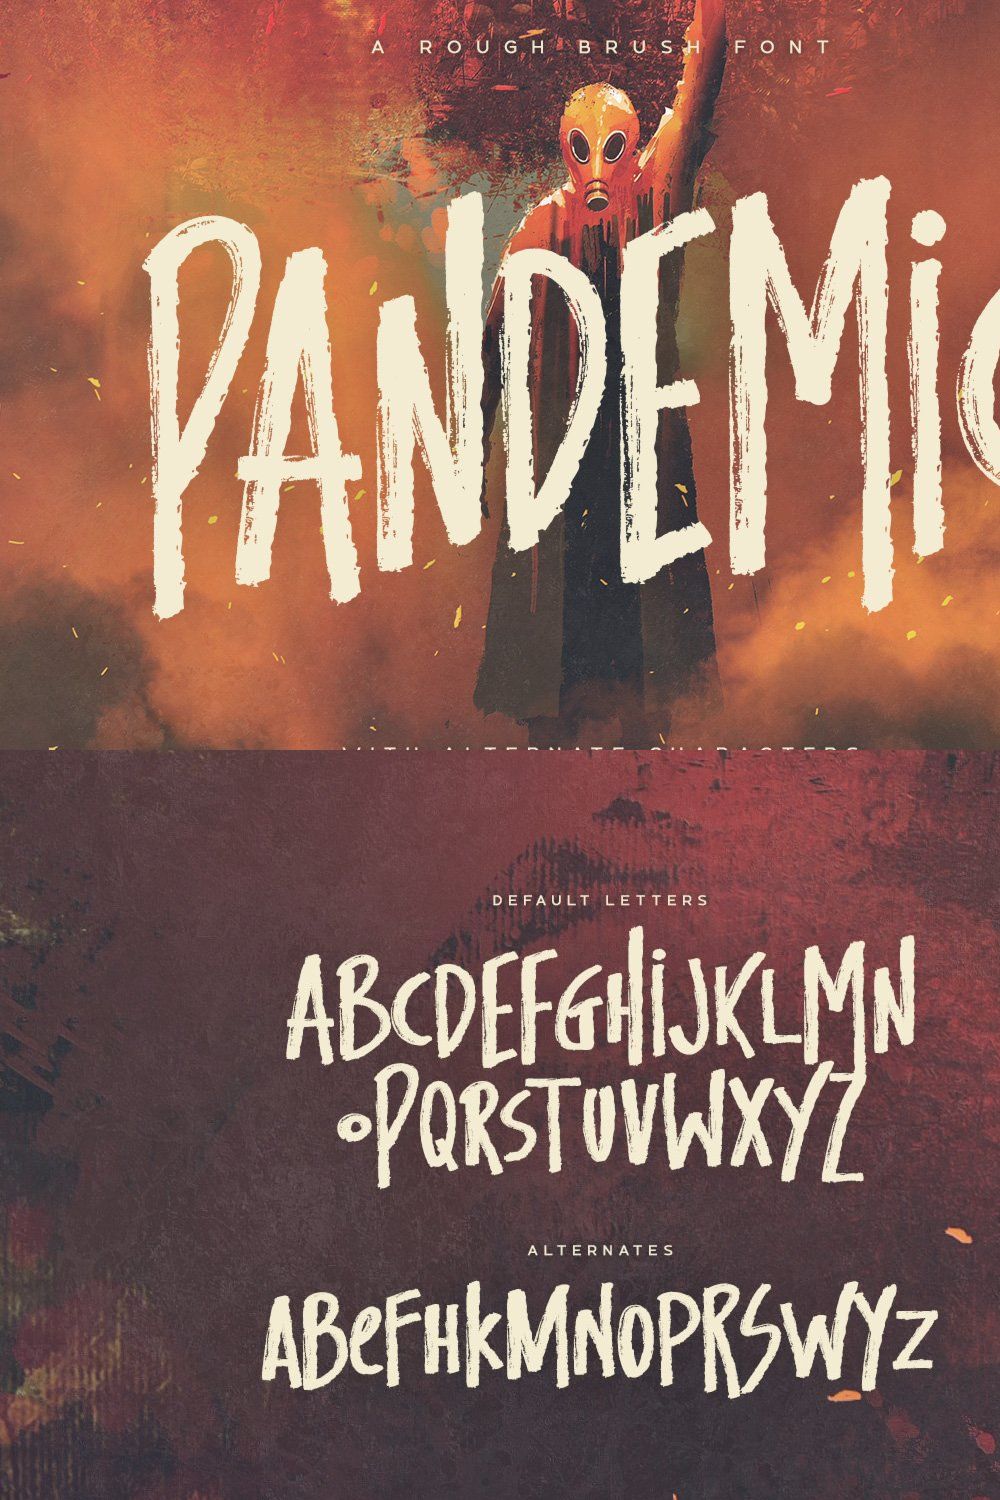 Pandemic - Brush Font pinterest preview image.